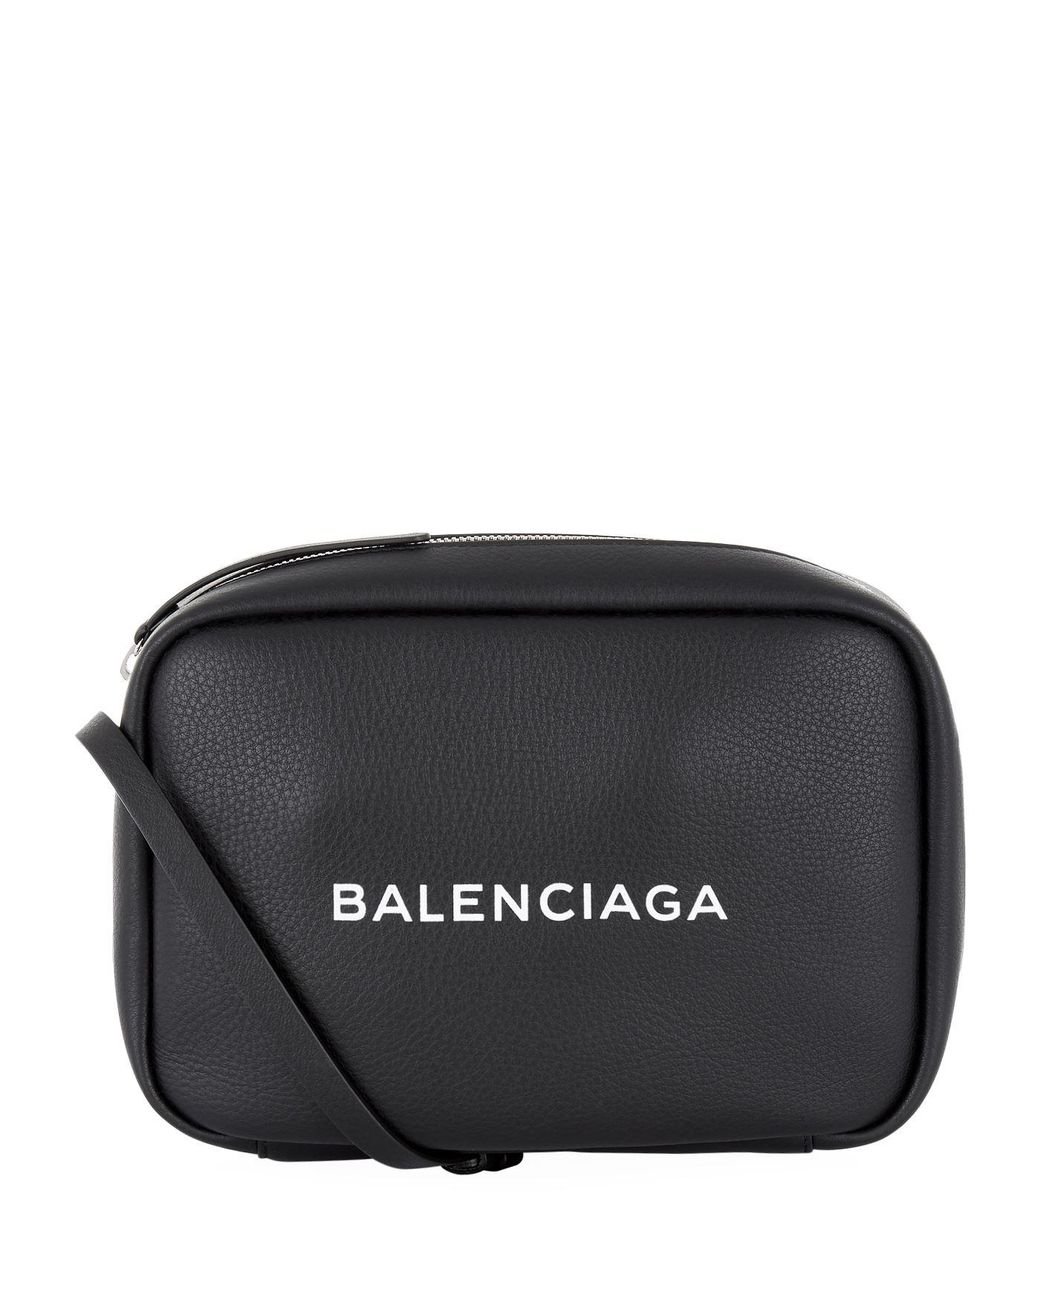 Balenciaga Everyday Camera Bag in White | Lyst